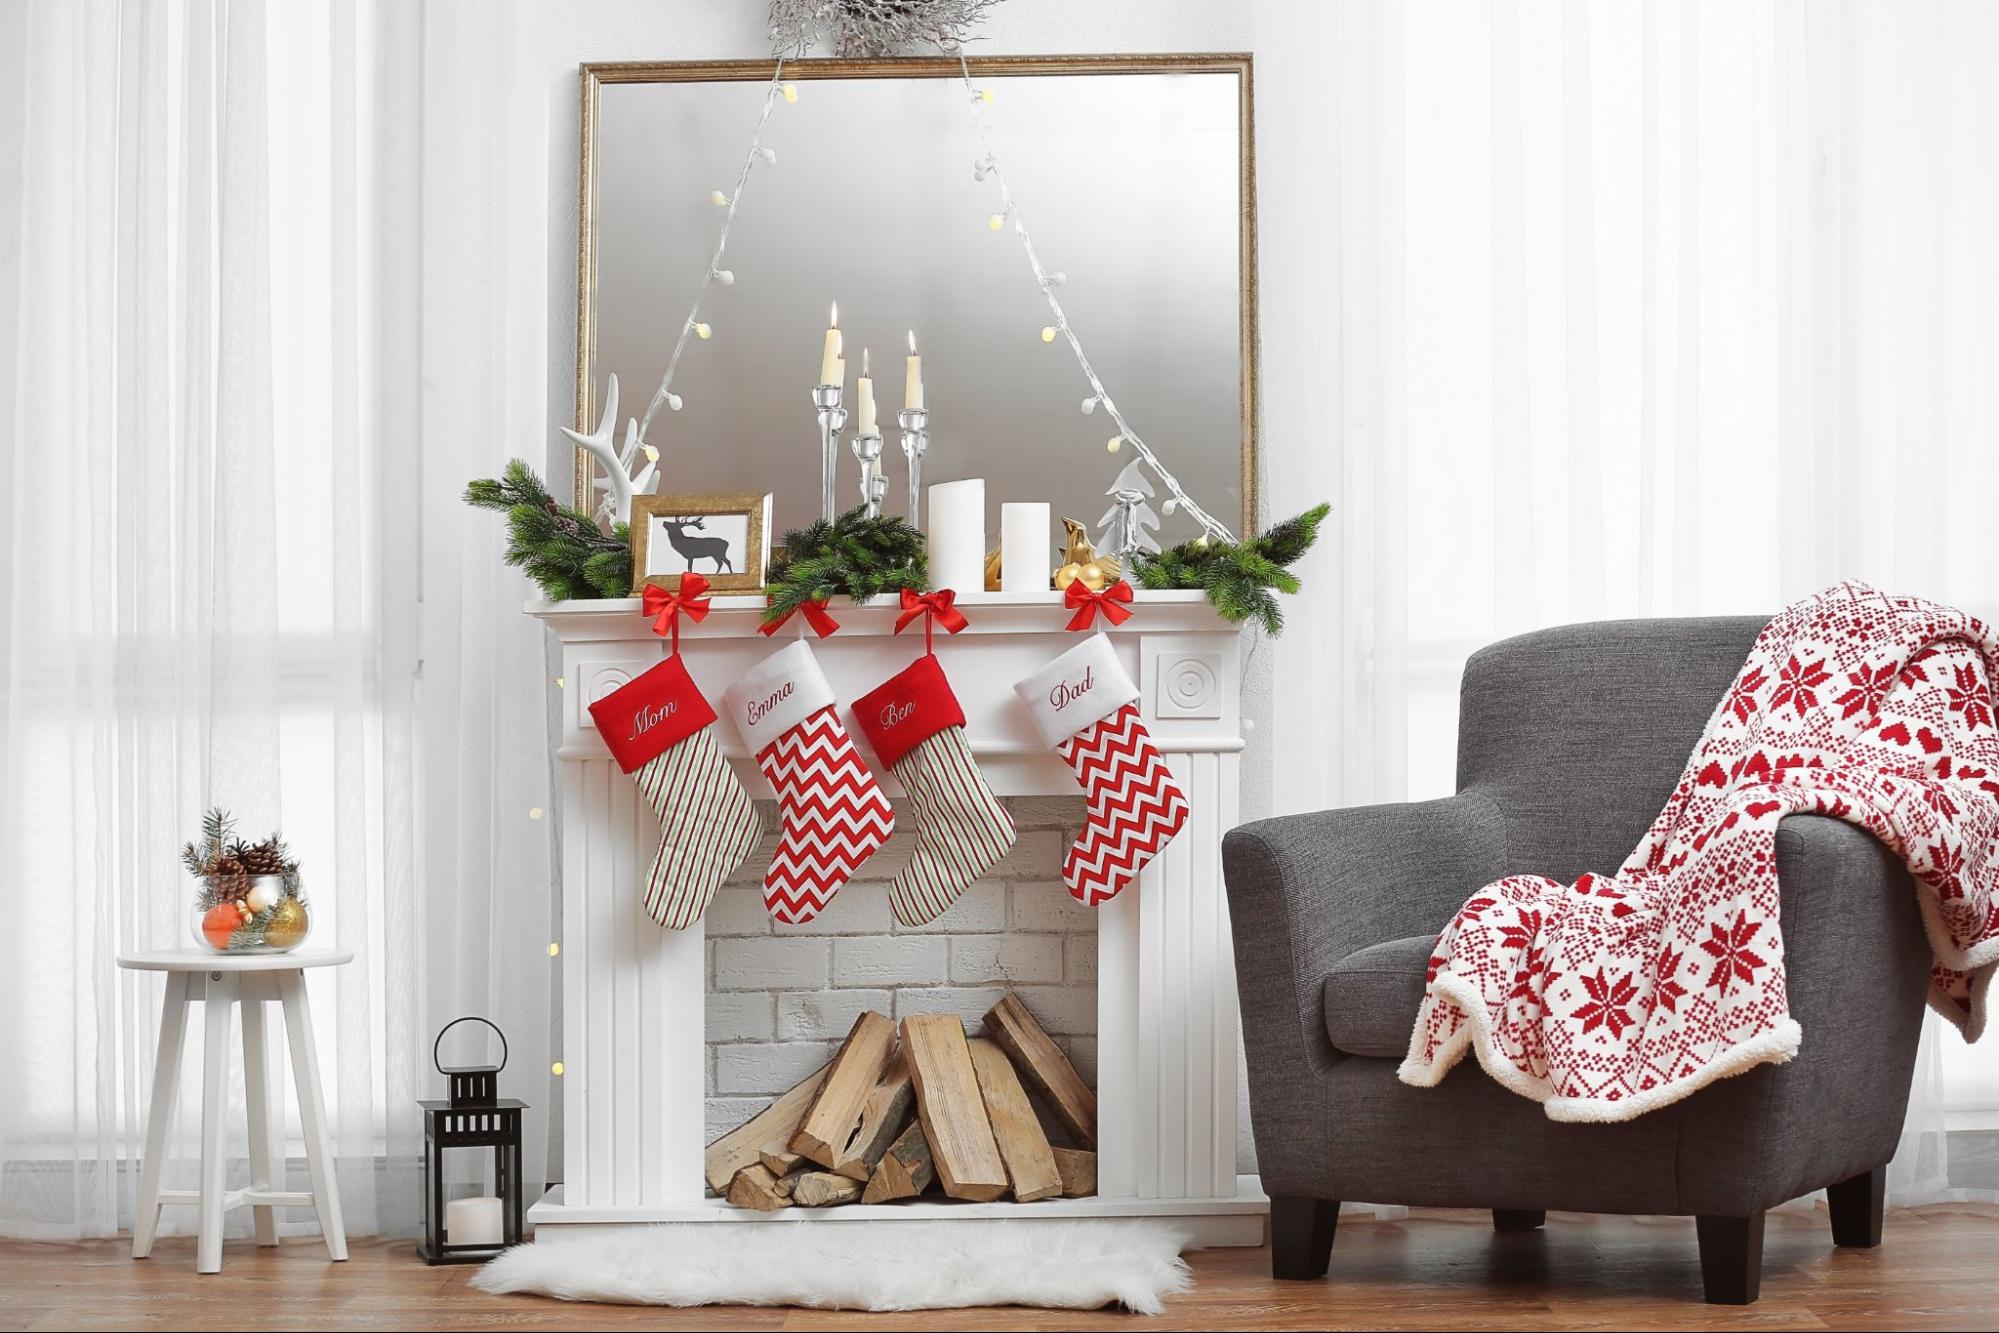 A simple, cozy Christmas decoration theme